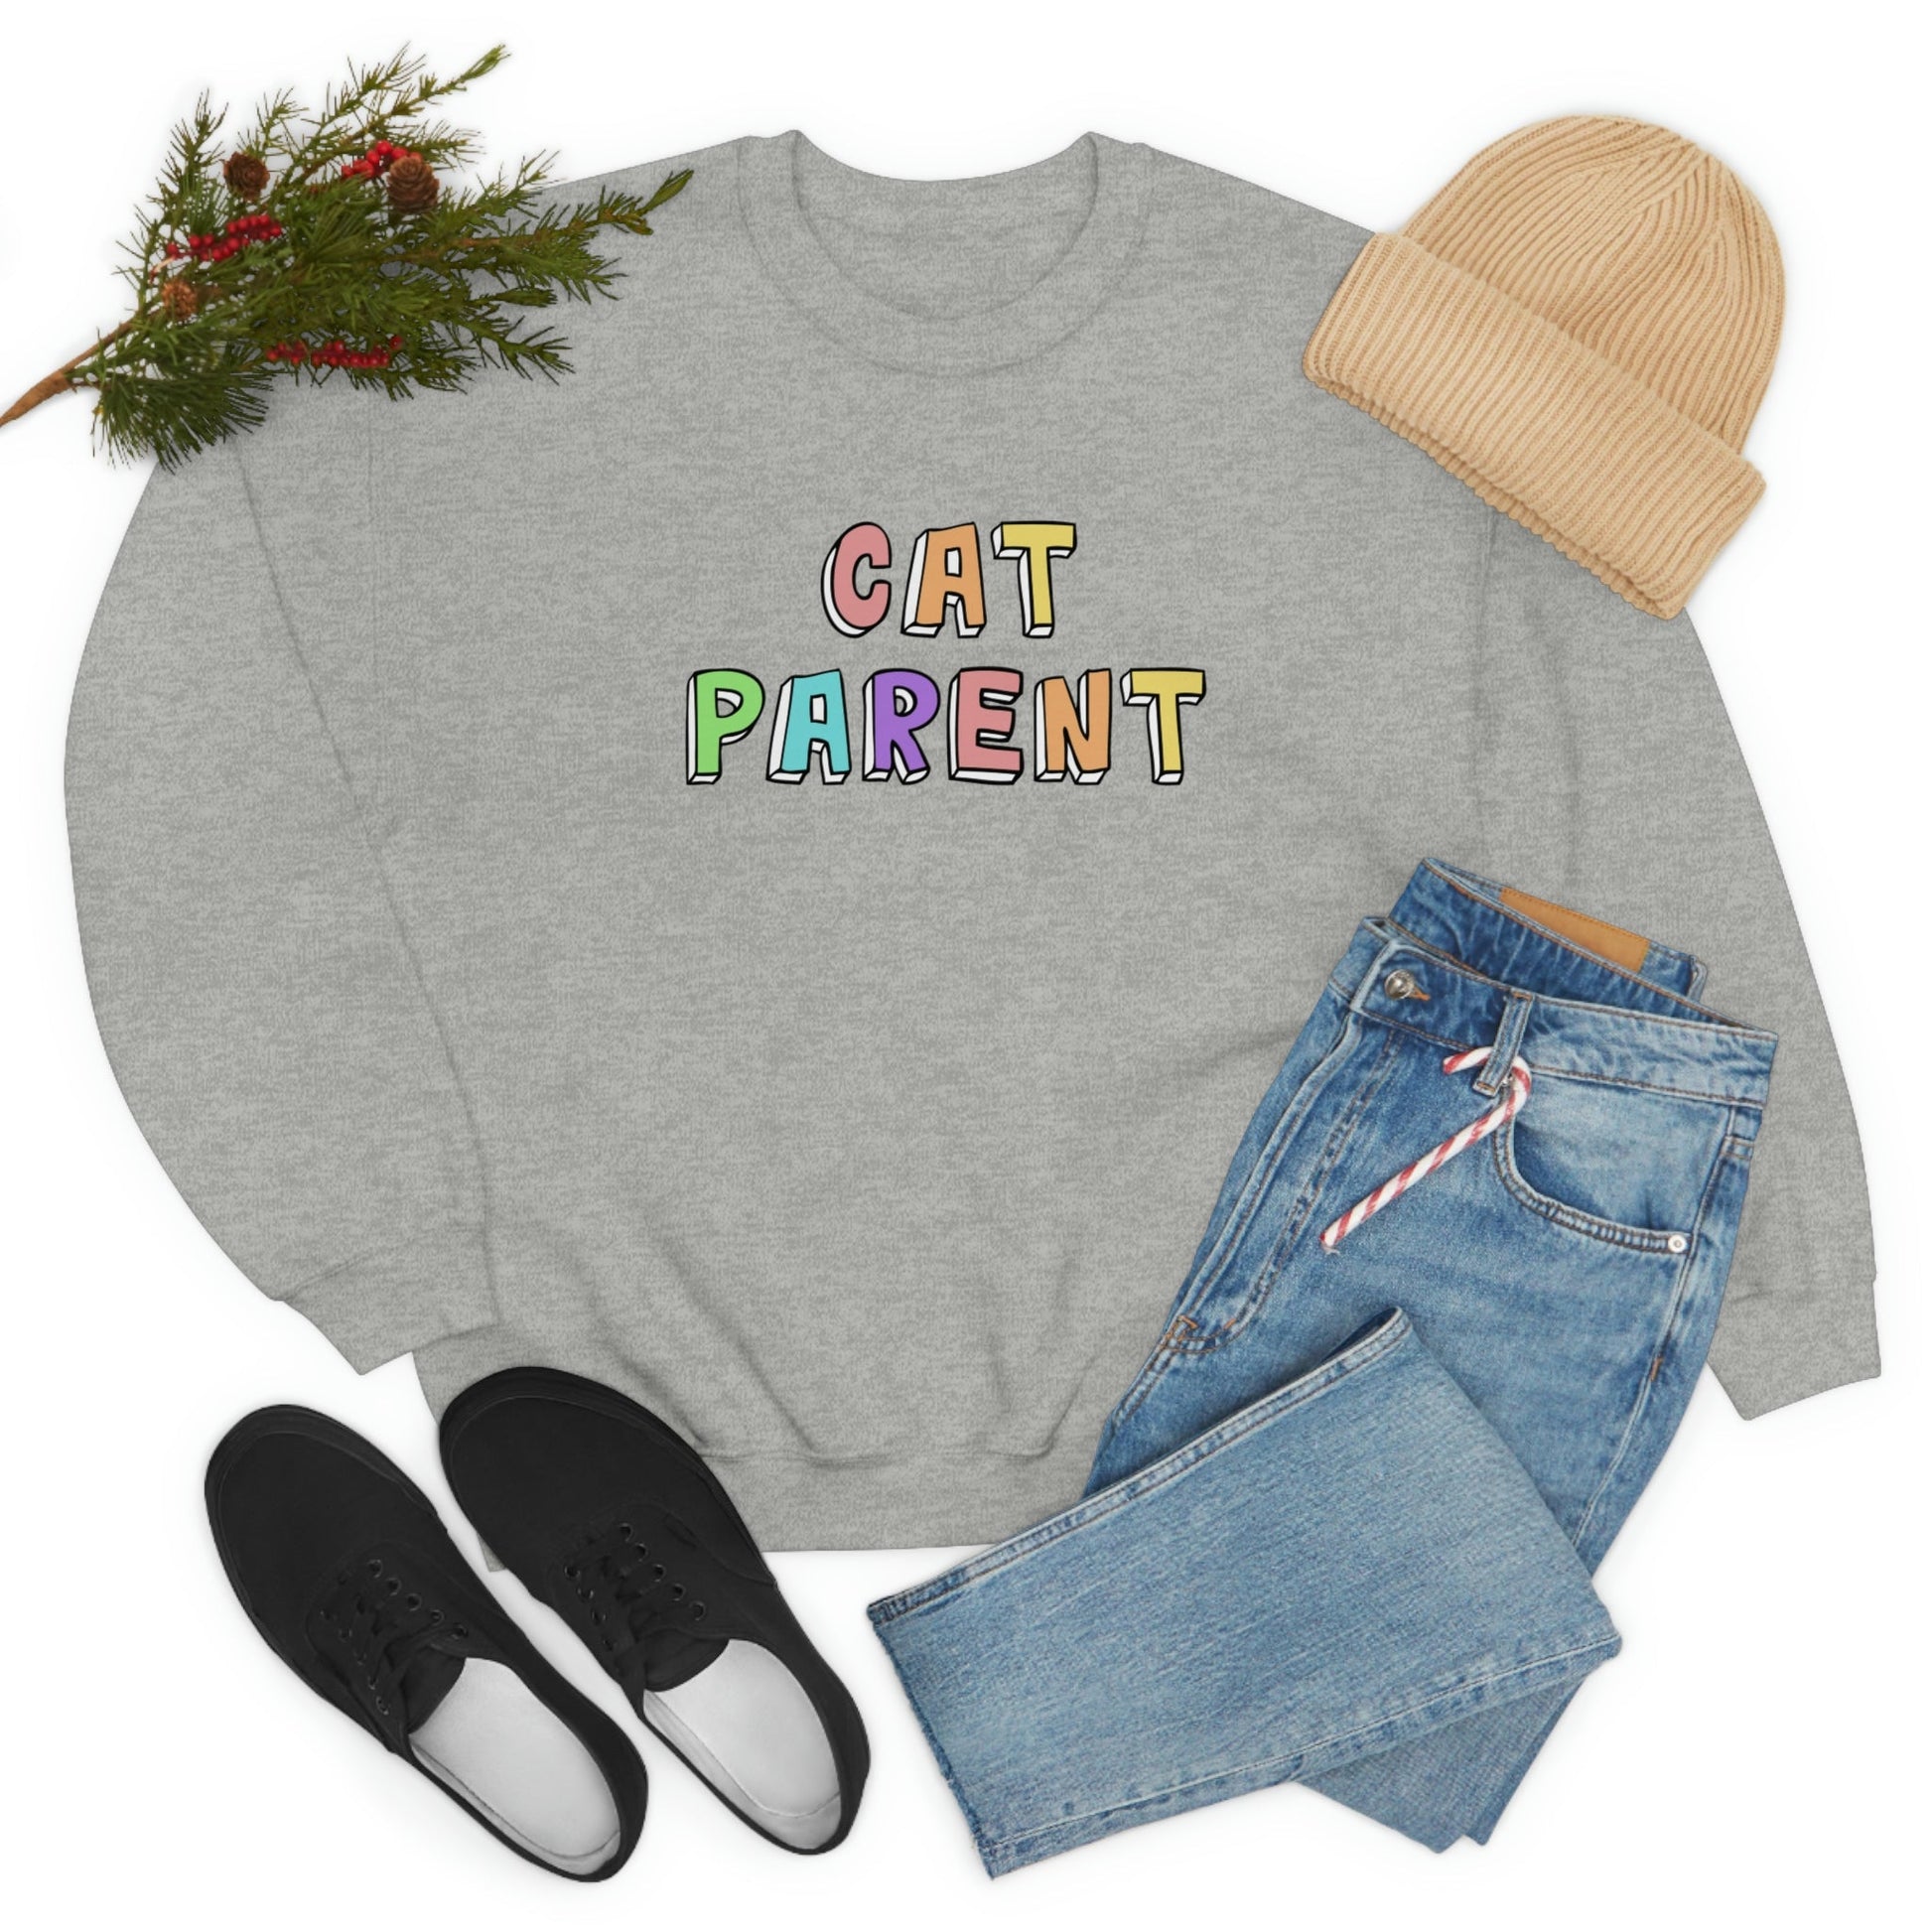 Cat Parent | Crewneck Sweatshirt - Detezi Designs-21487676387543582397